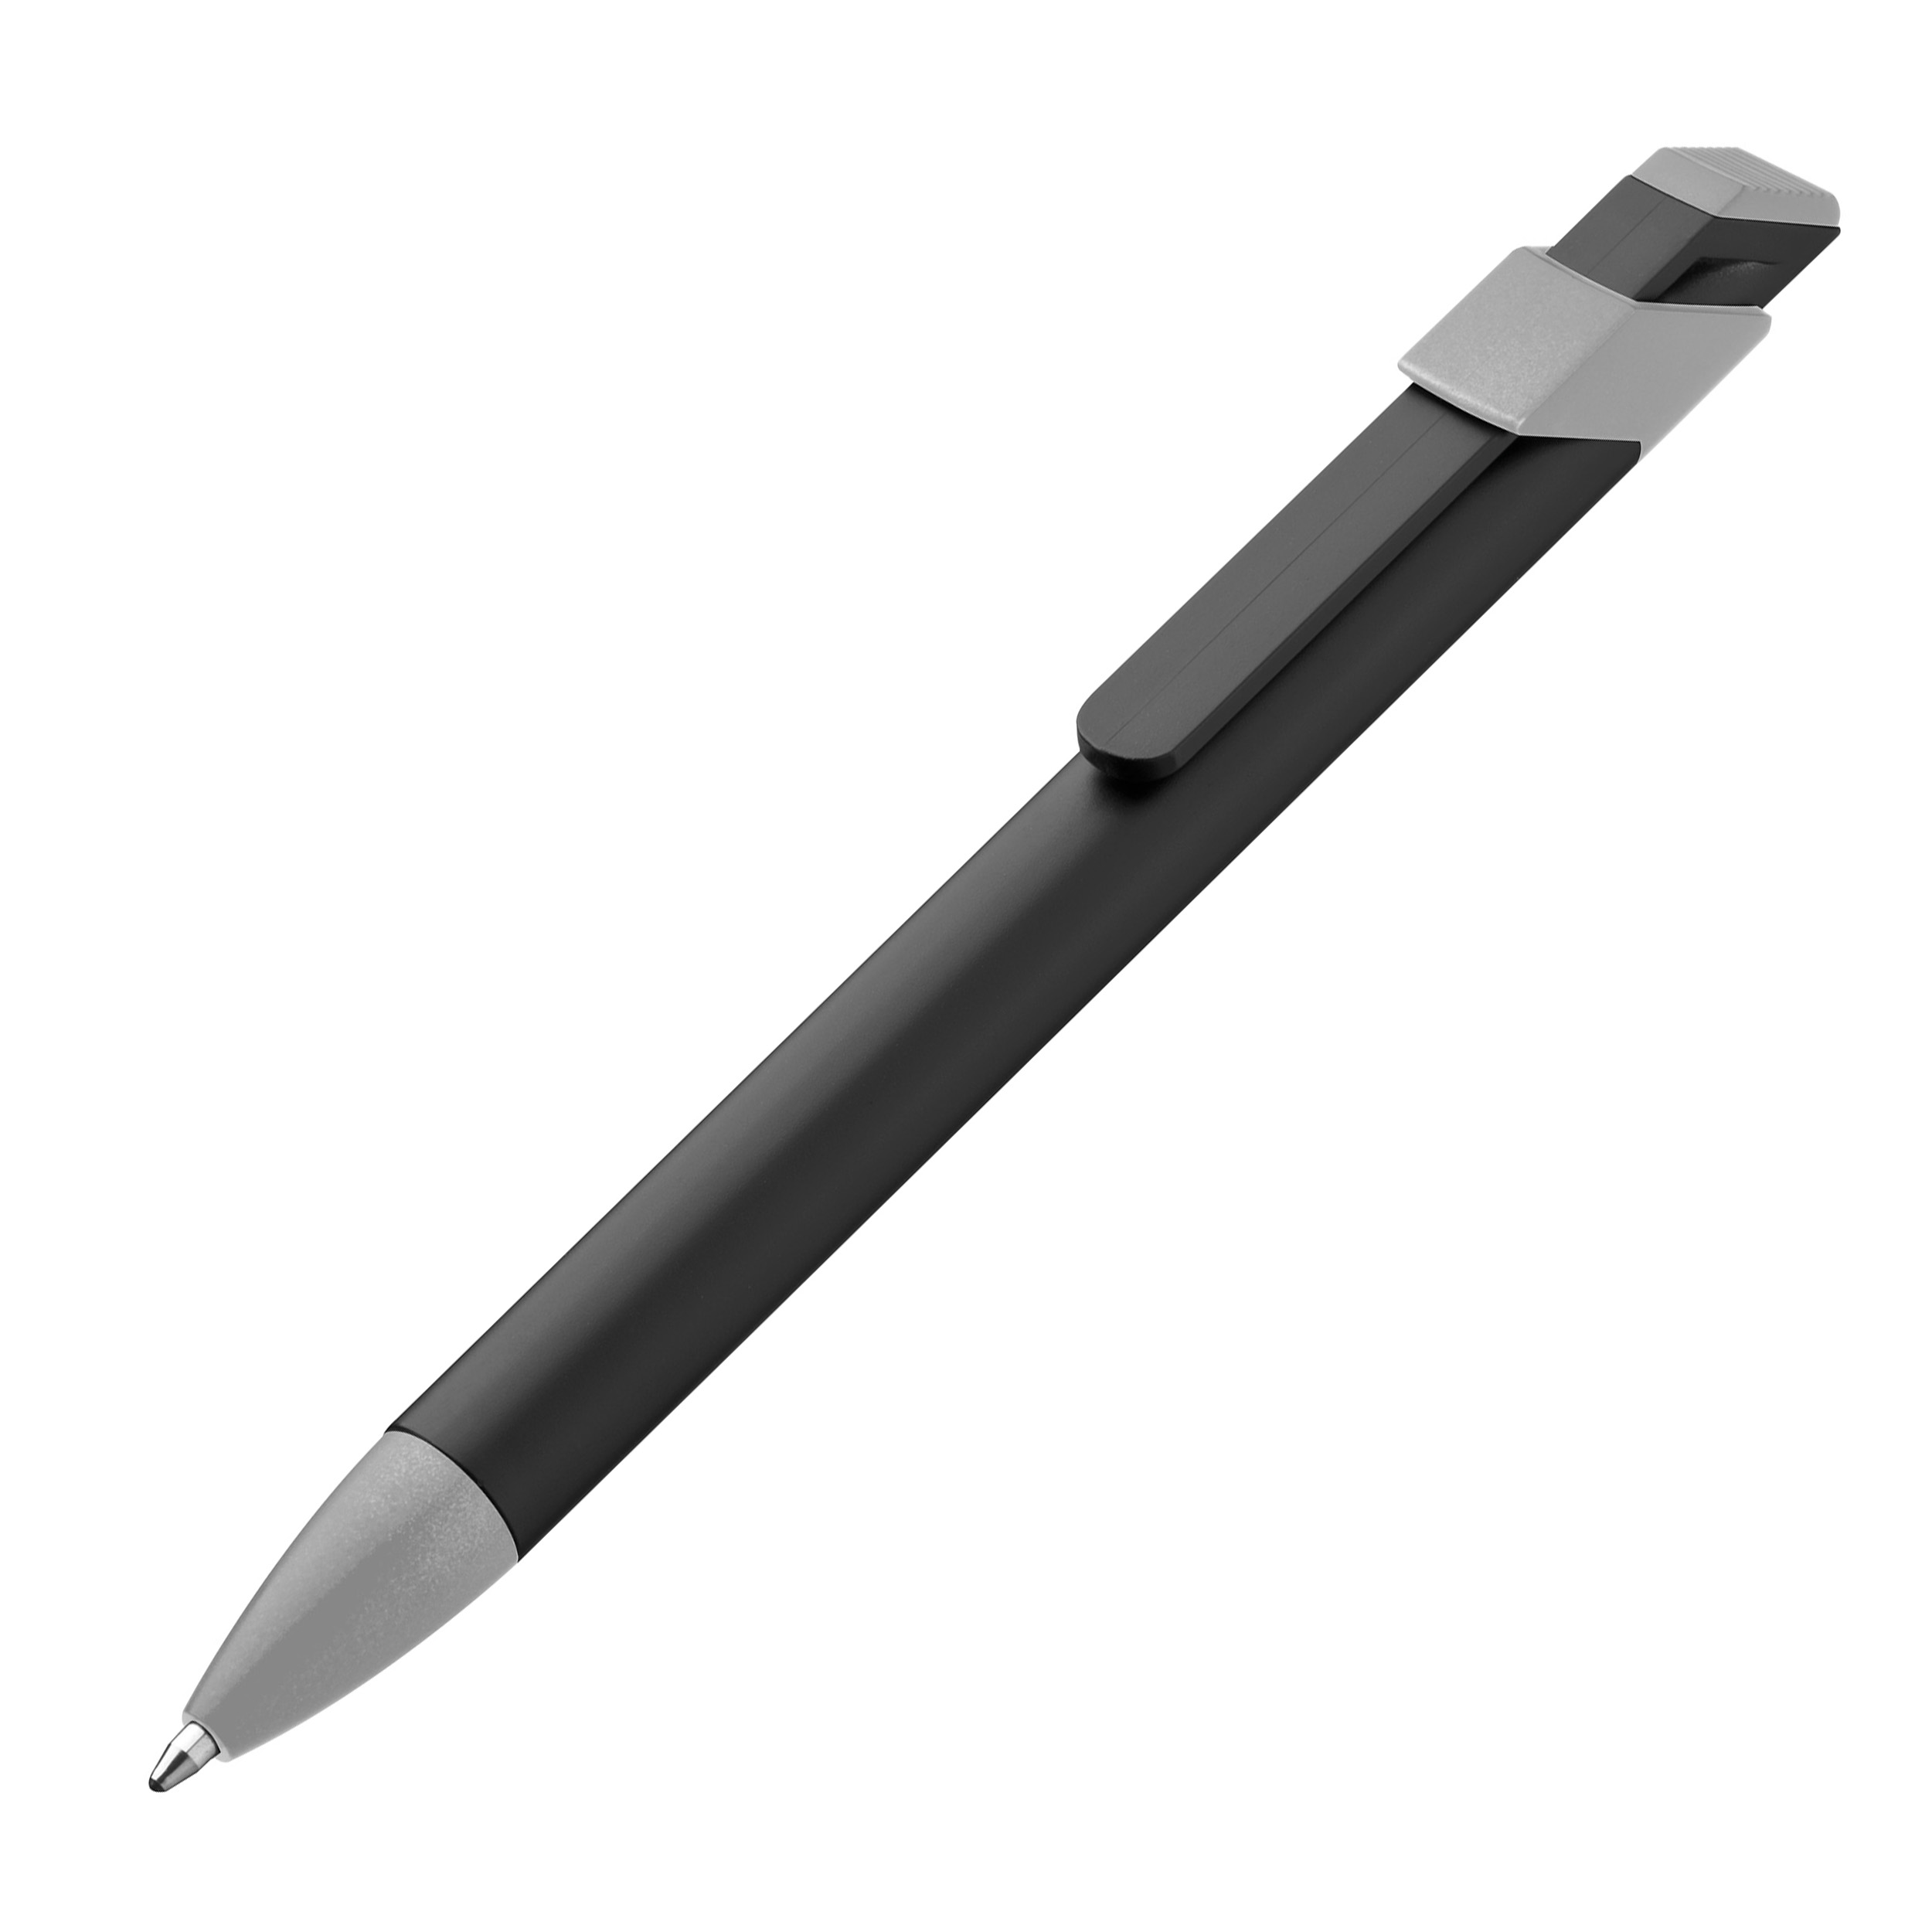 Black ball pen